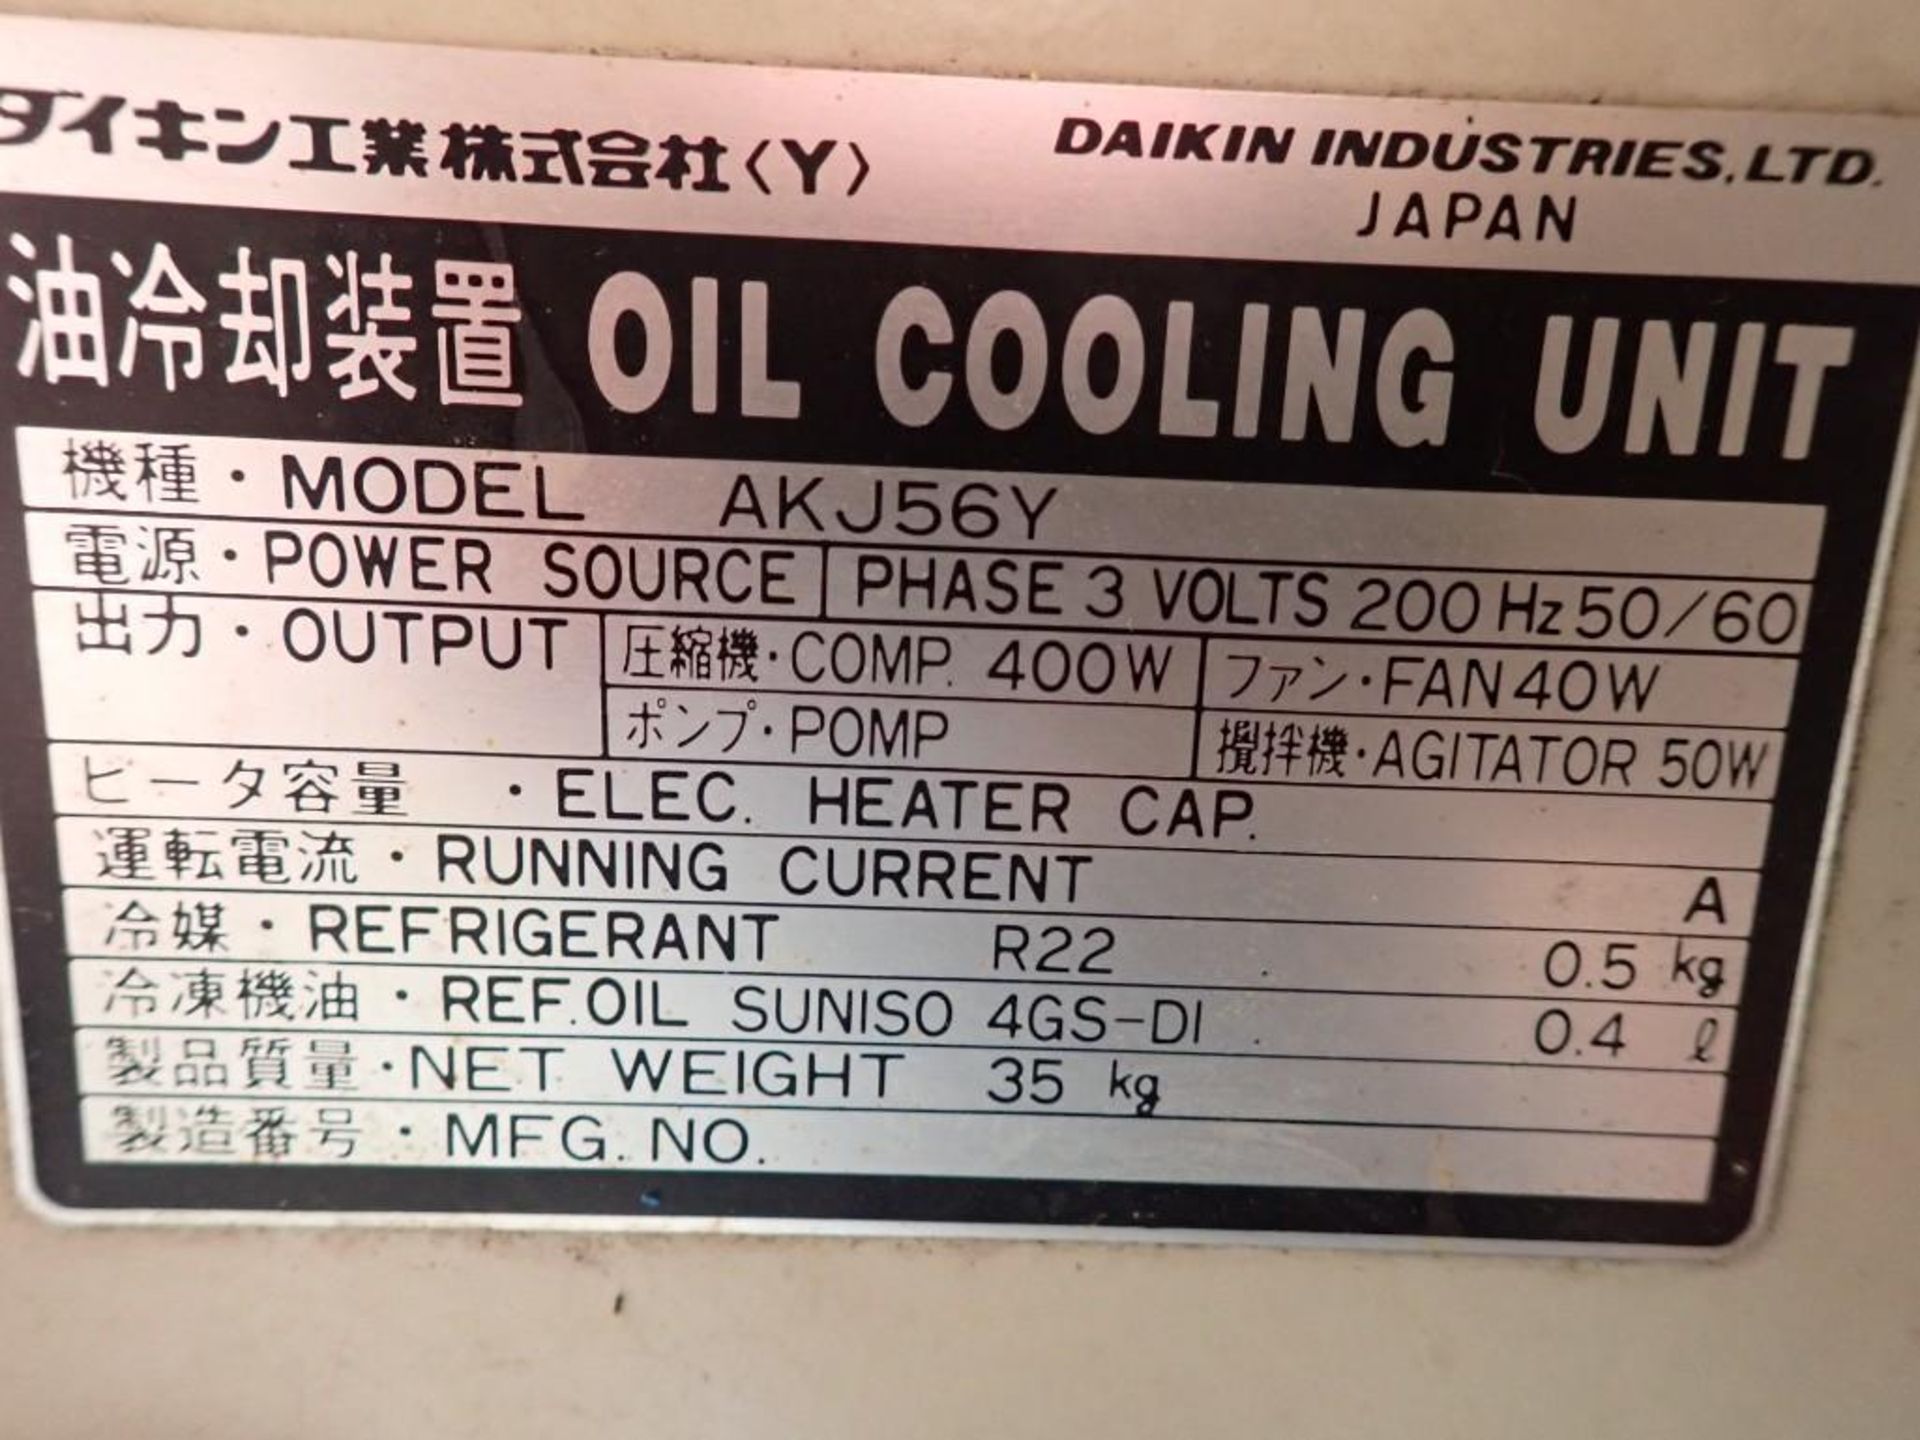 Lot of (2) Daikin #AKJ56Y Oil Cooling Units - Image 7 of 9